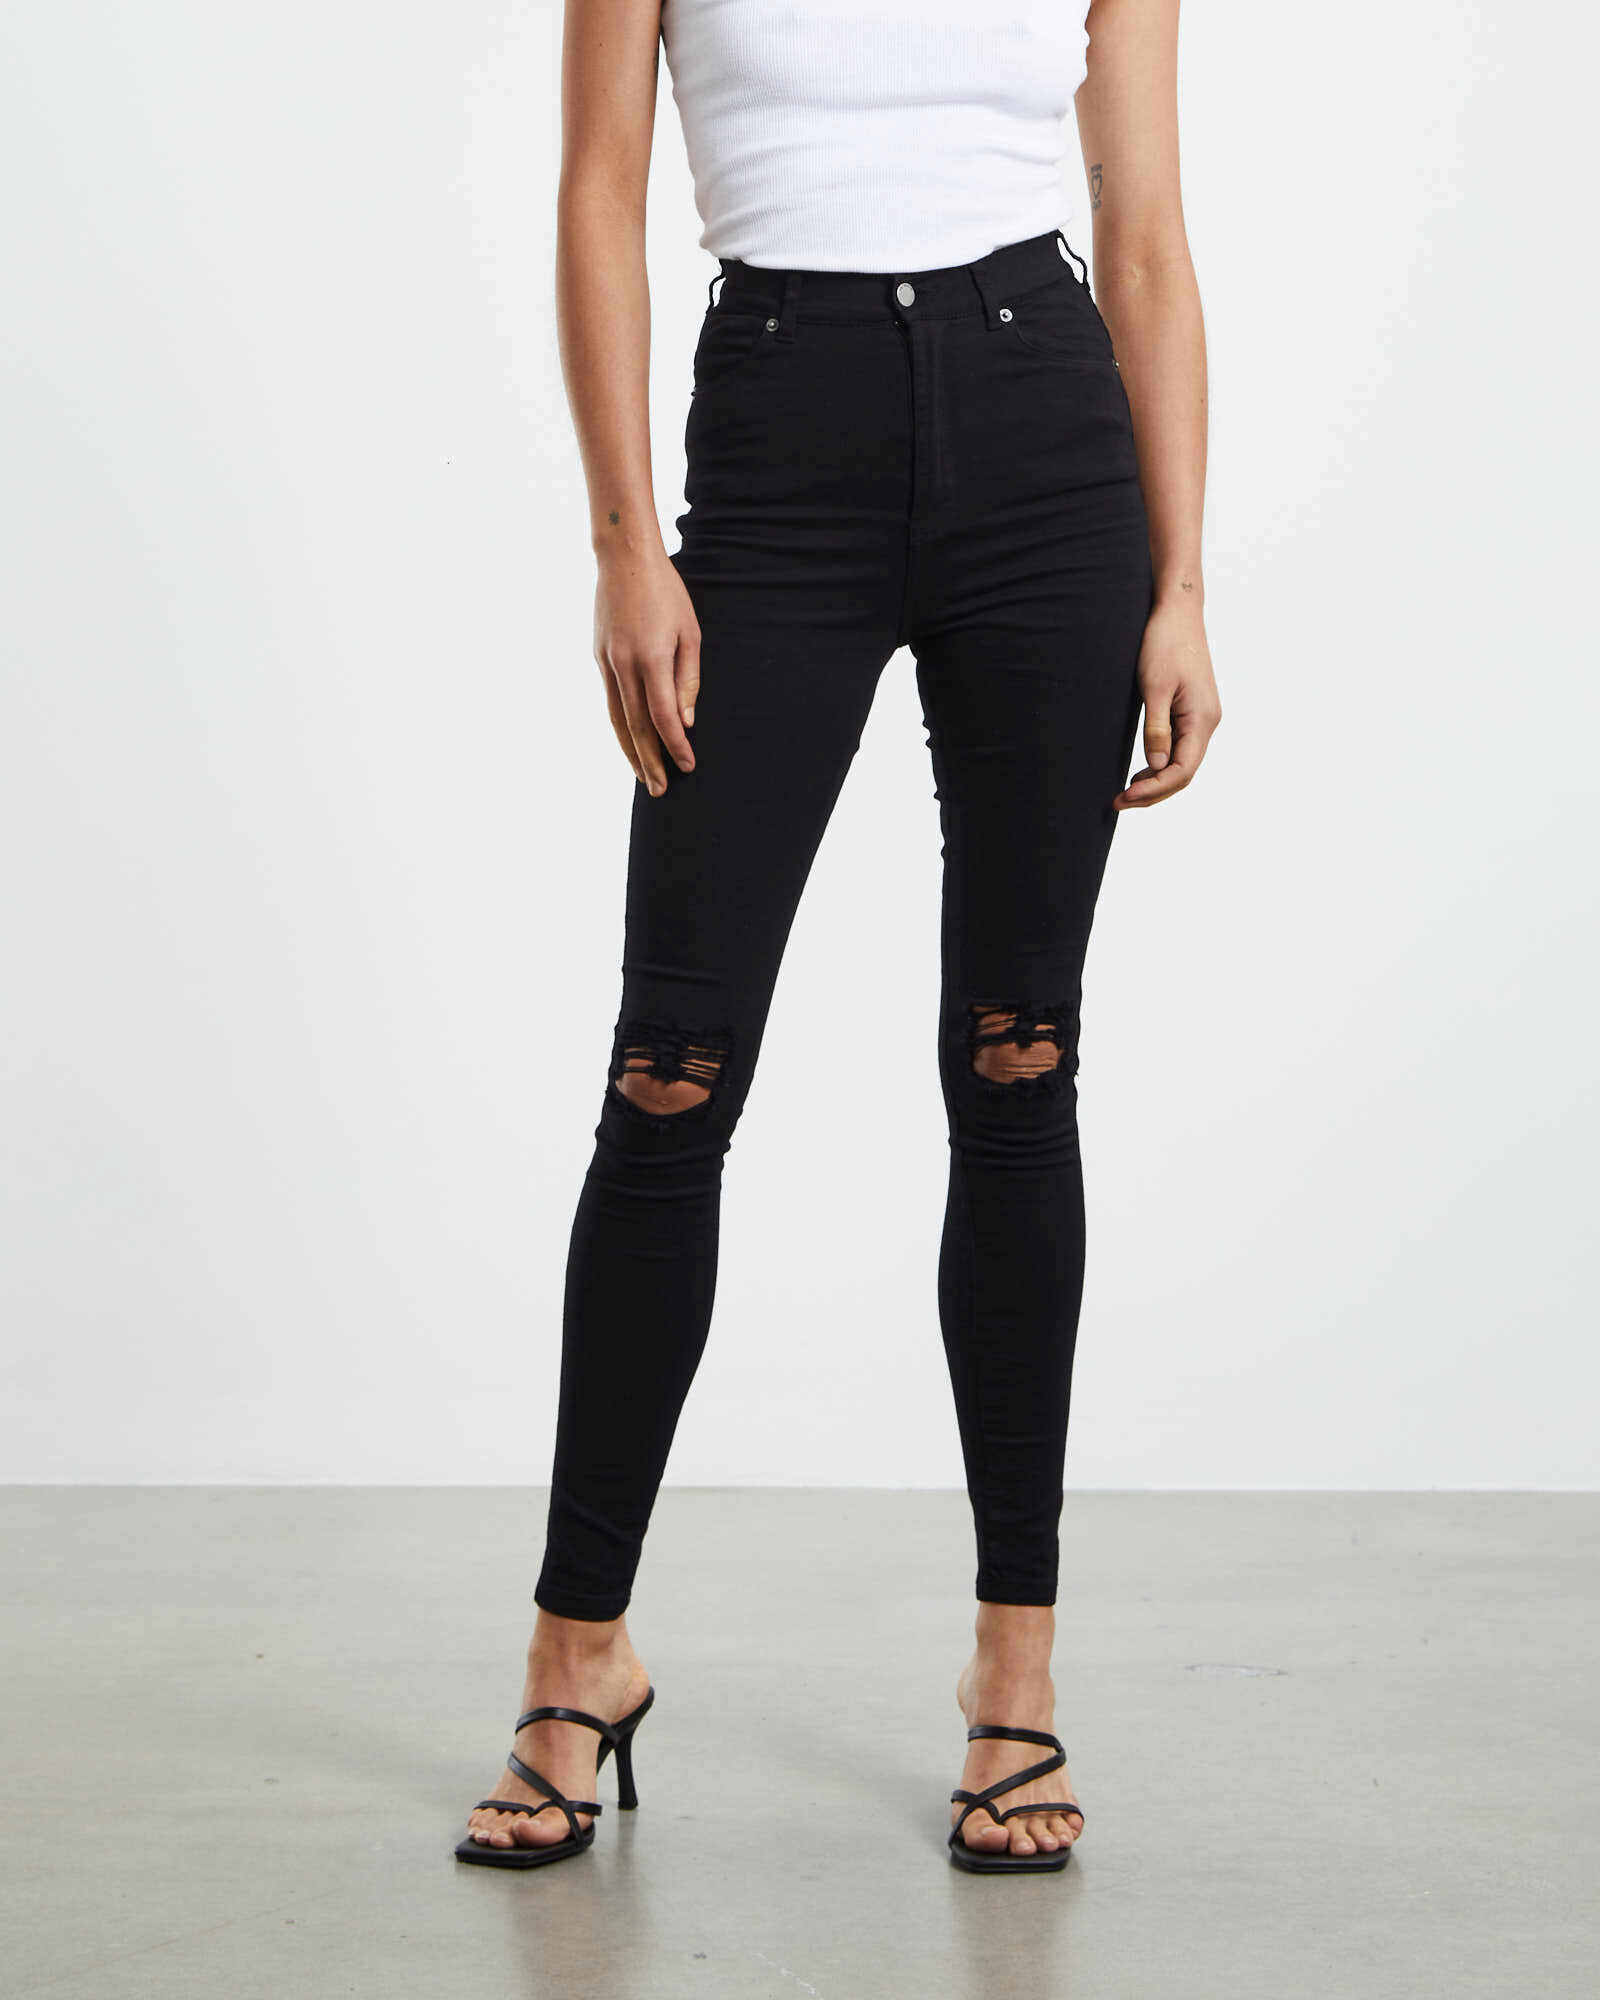 Top 300+ Black knee ripped jeans womens - sosfashion75.com